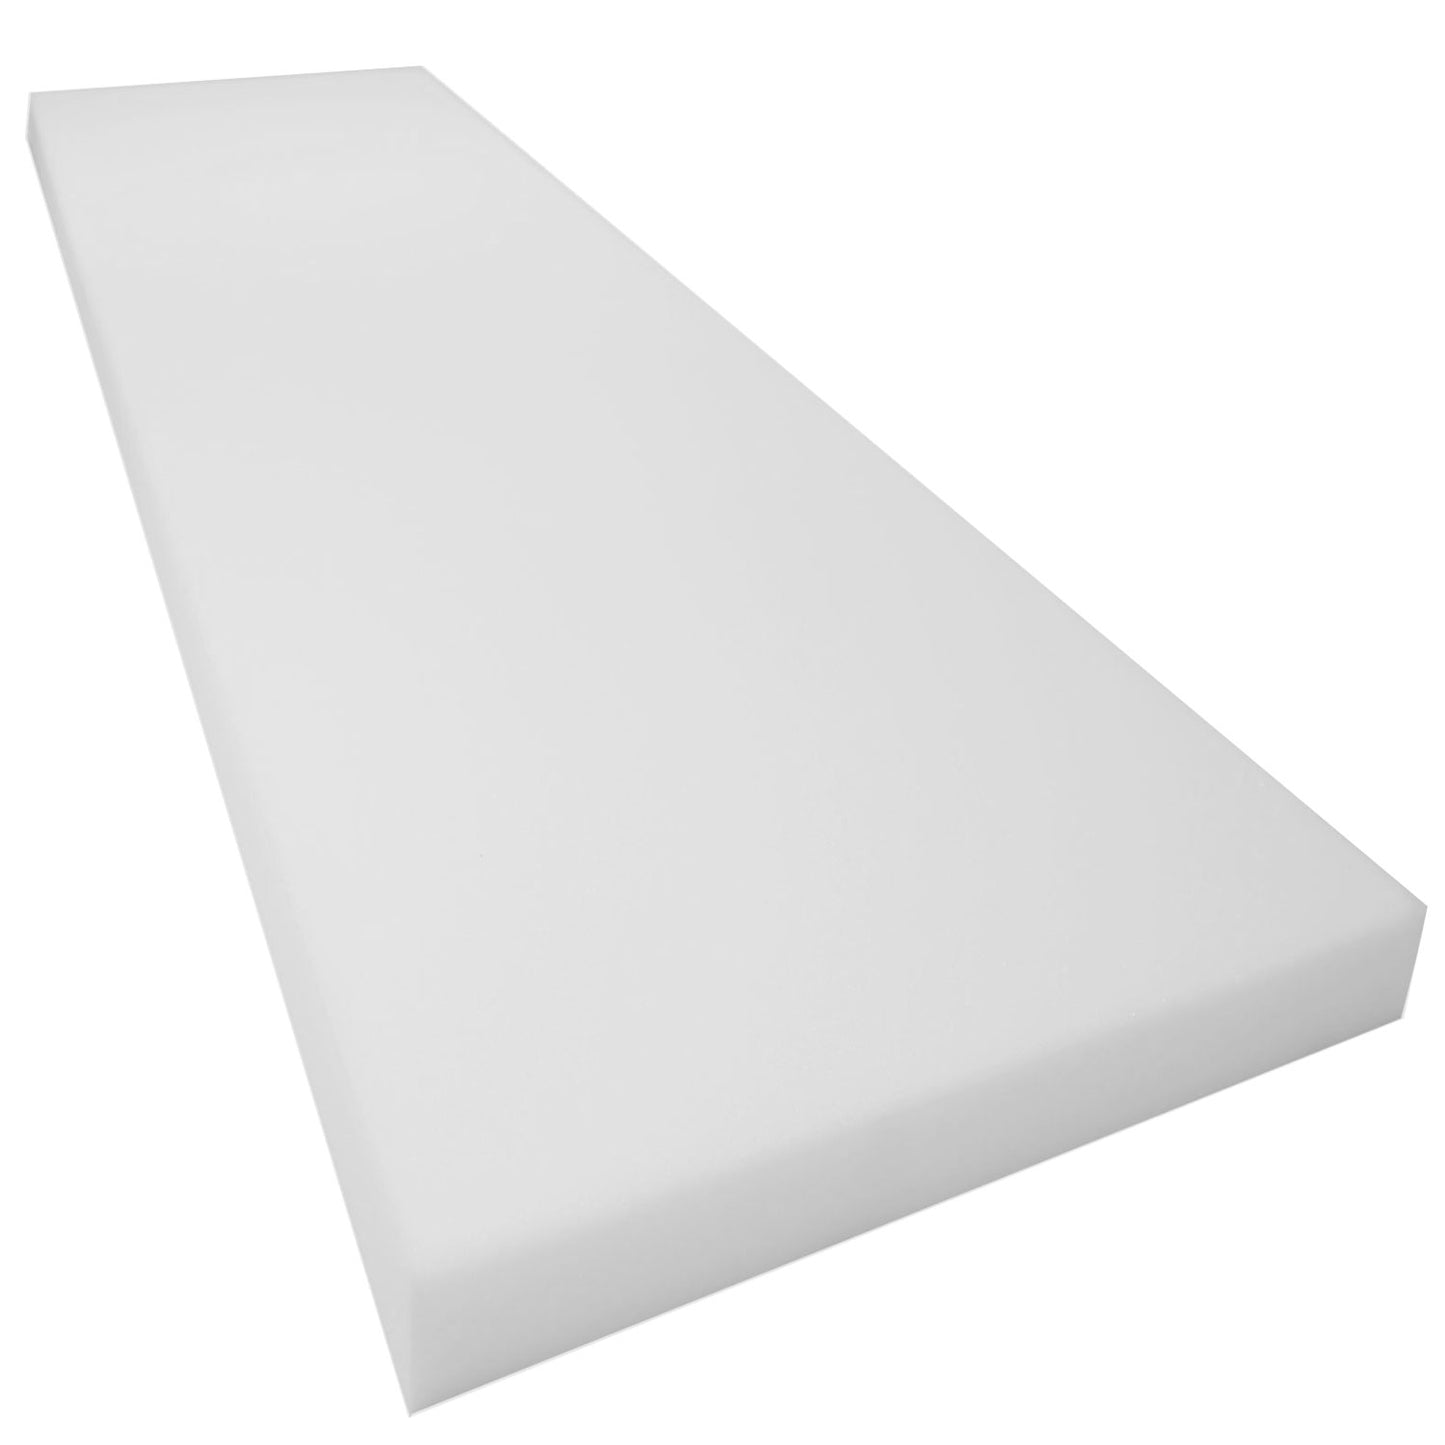 Mybecca 2" x 20"x 20" Upholstery Foam Cushion High Density (Seat Replacement, Upholstery Sheet, Foam Padding)